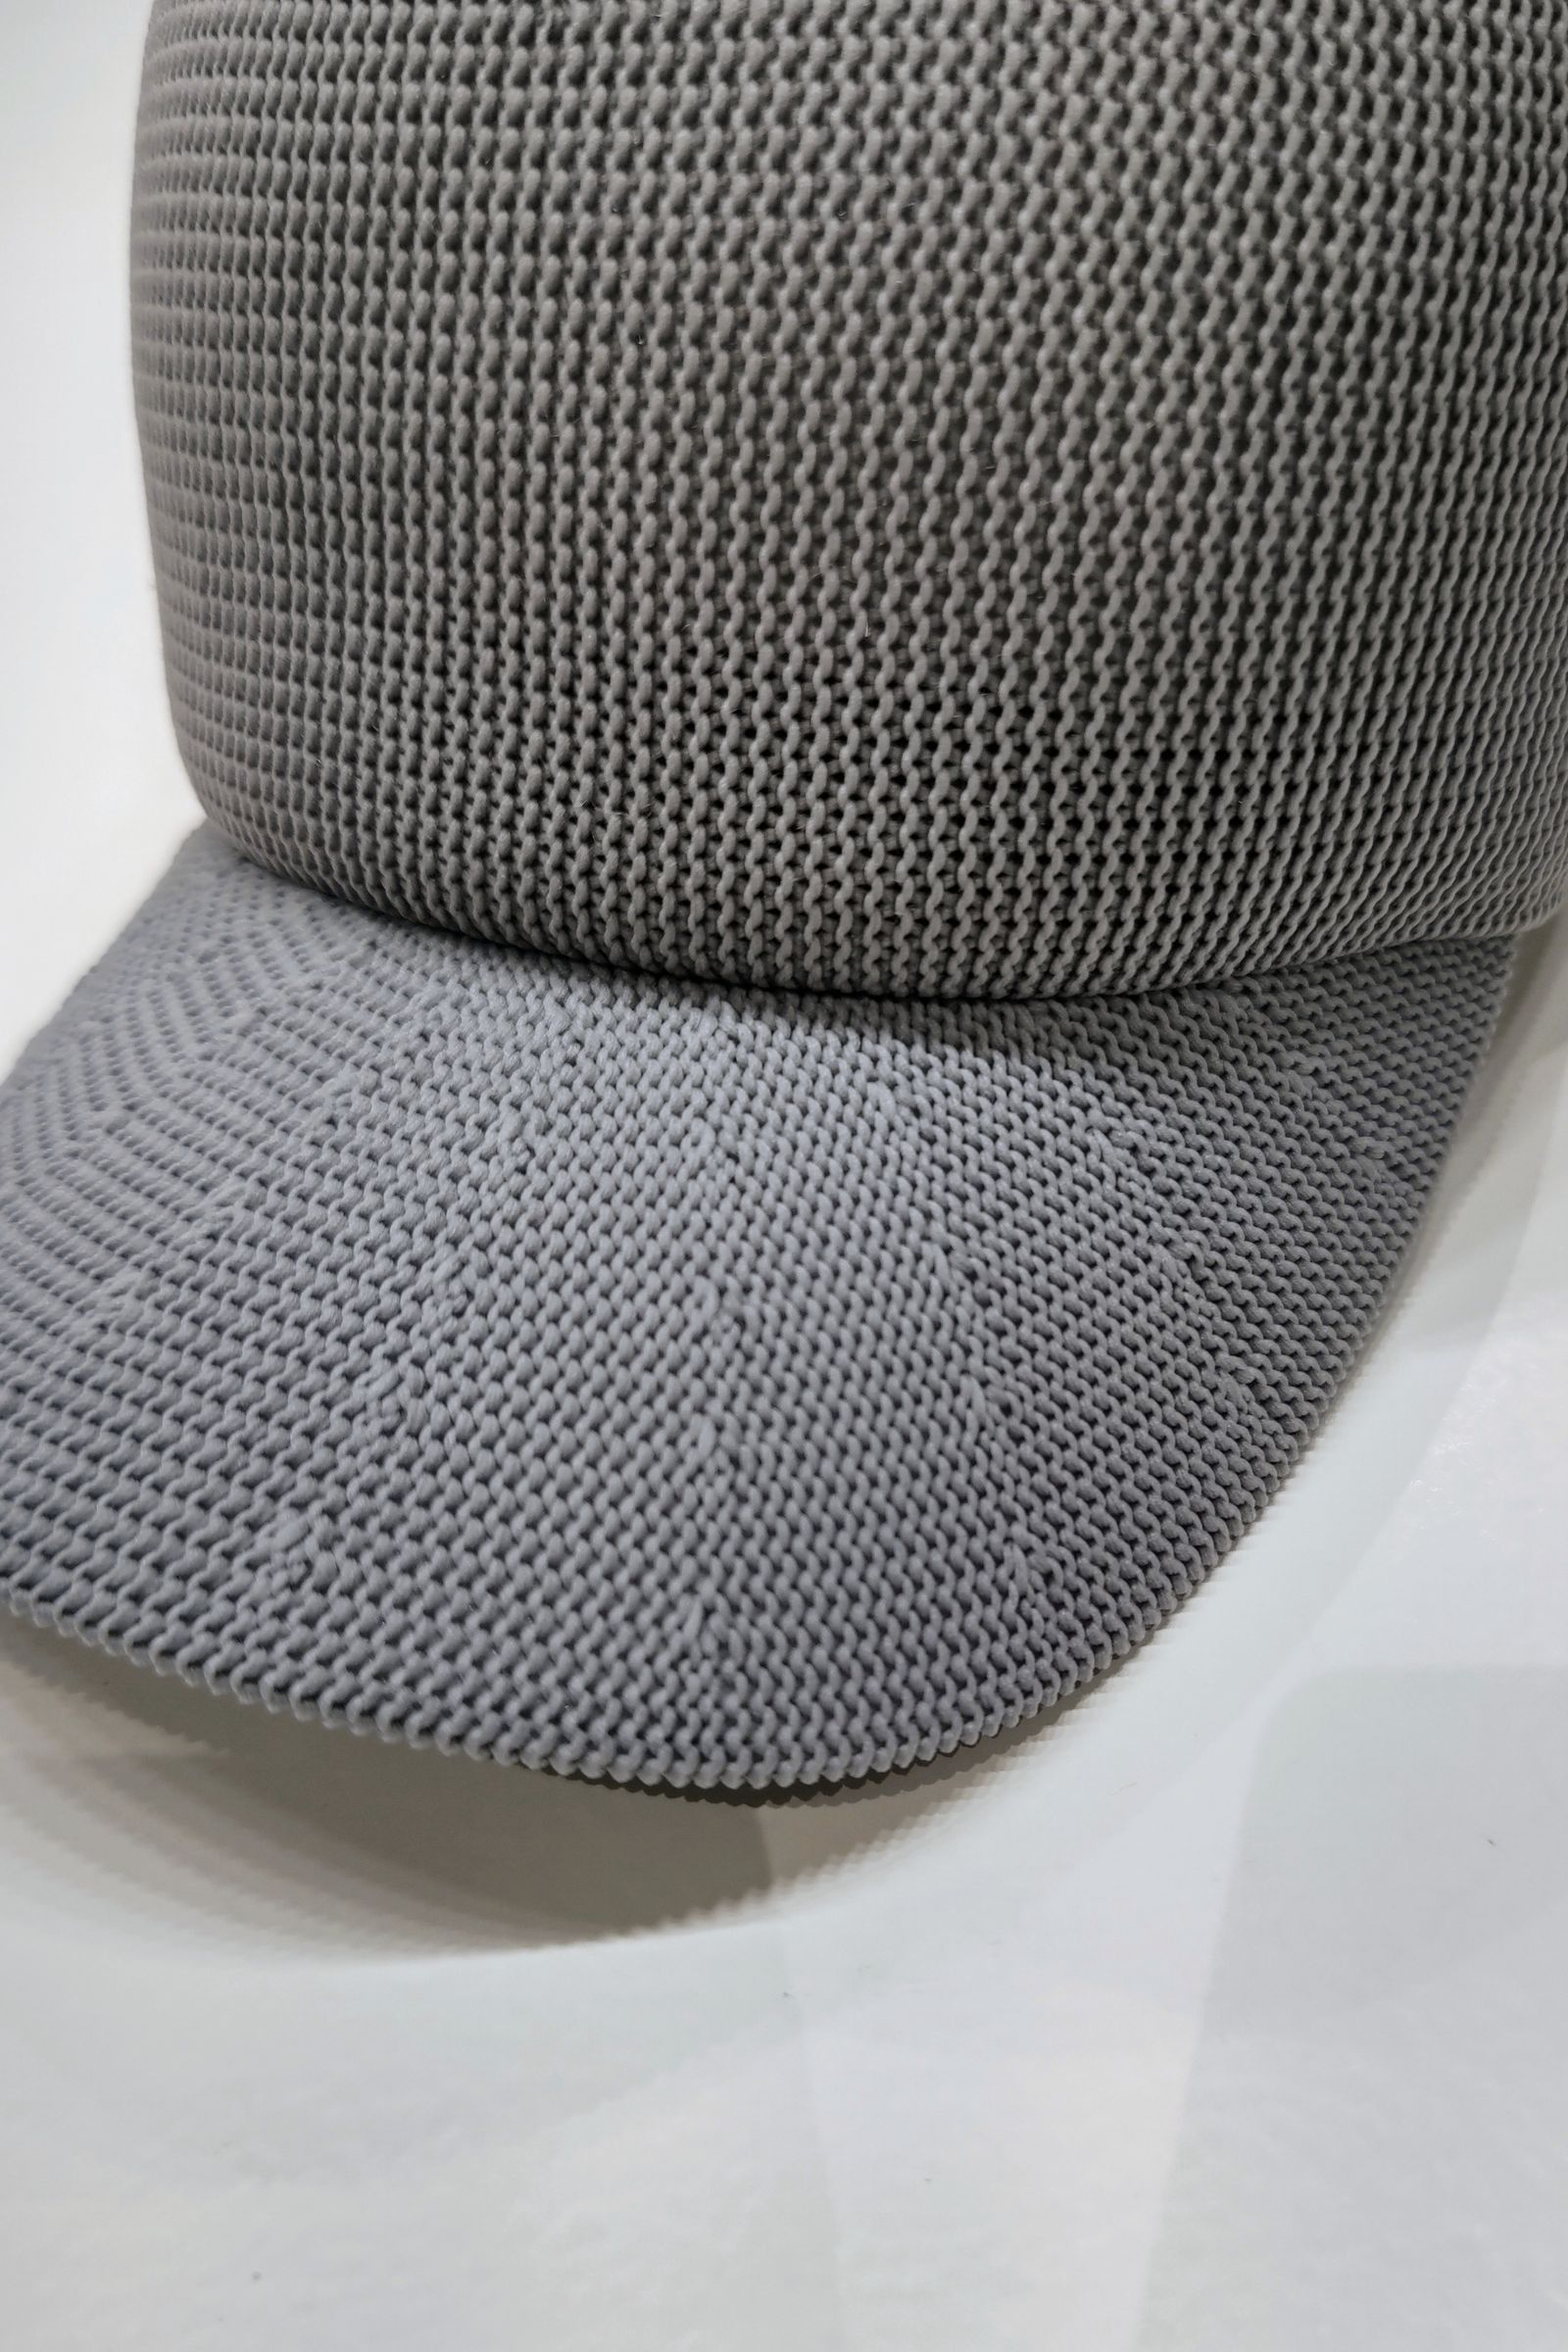 CFCL - mesh knit cap 1 -gray- 23ss unisex | asterisk